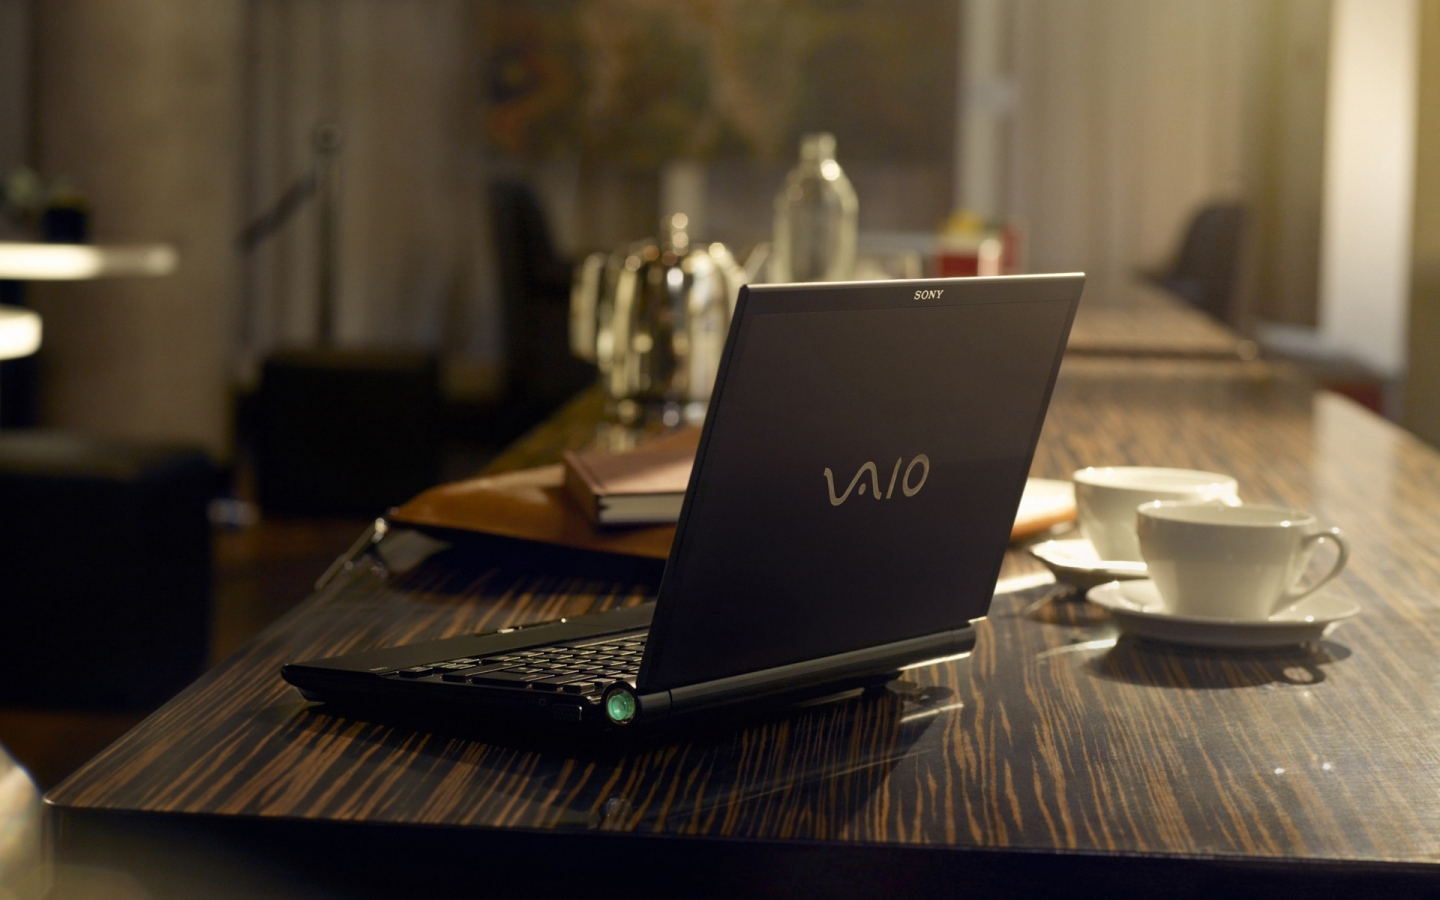 Vaio Notebook for 1440 x 900 widescreen resolution